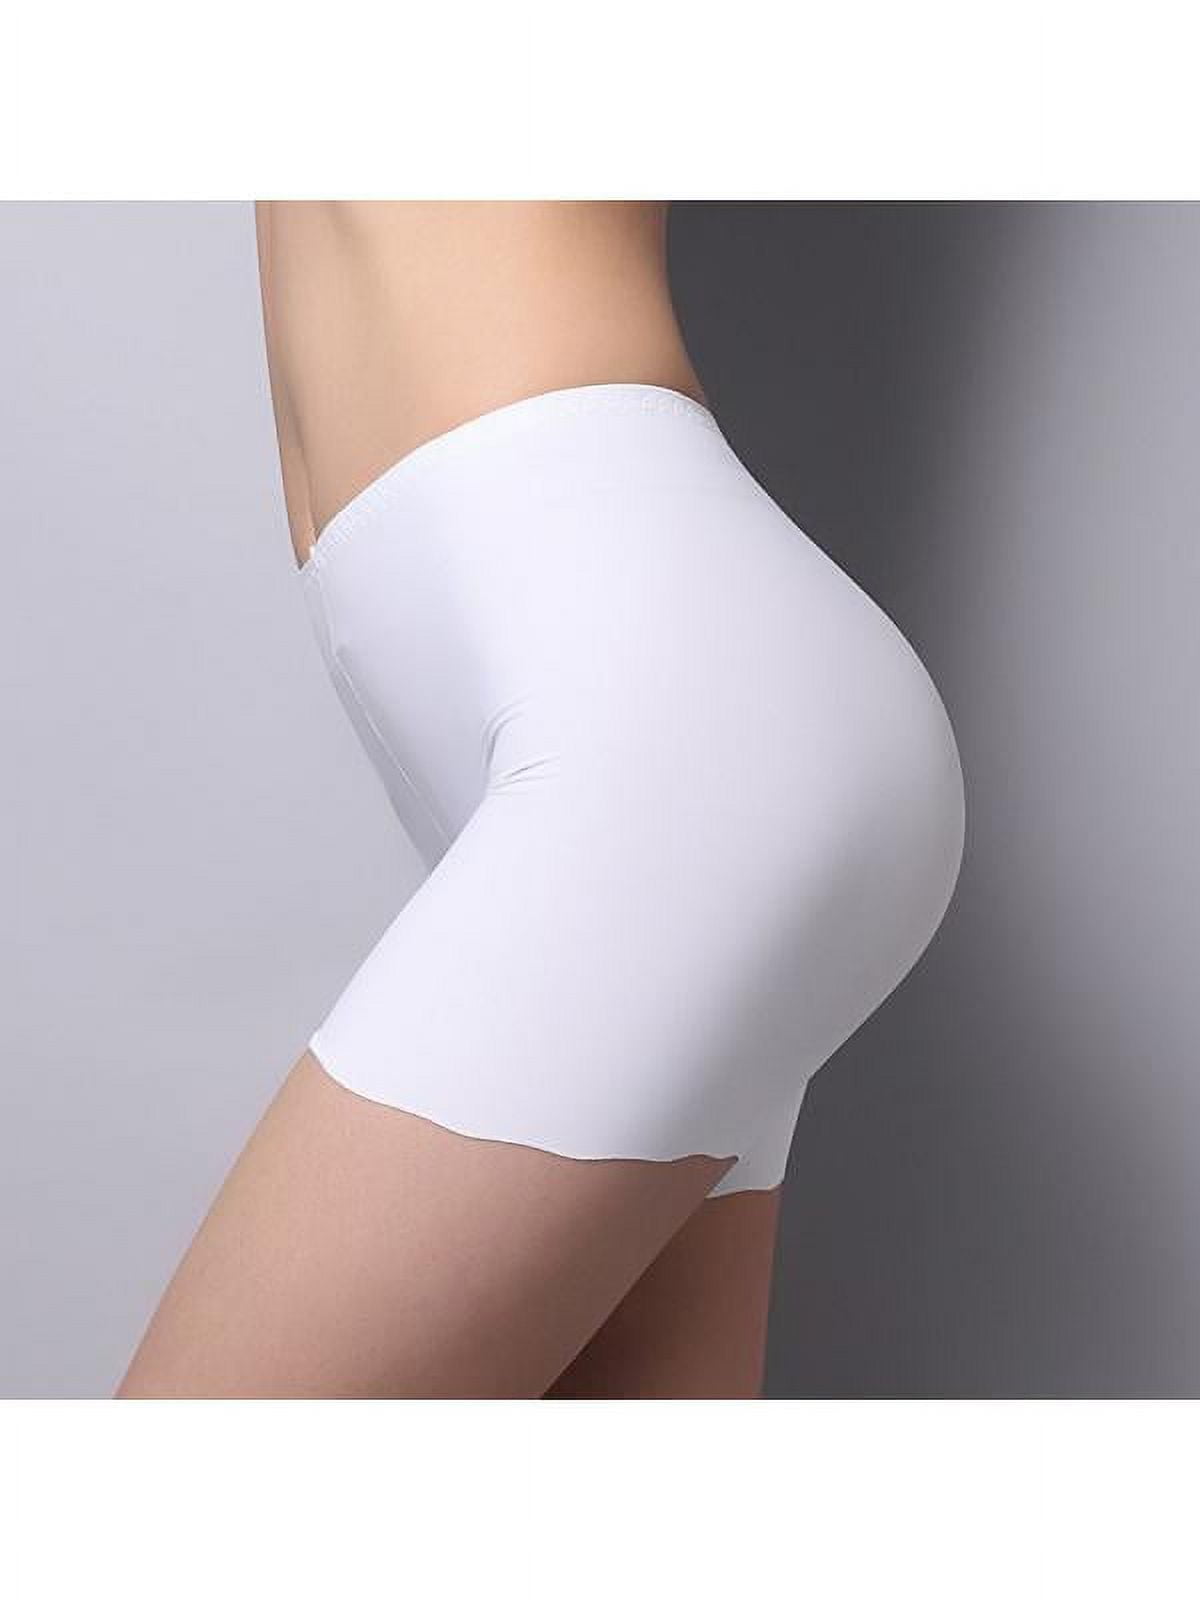 2019 Women High Waist Boxer Lingerie Shorts Pants Underwear Briefs One Size